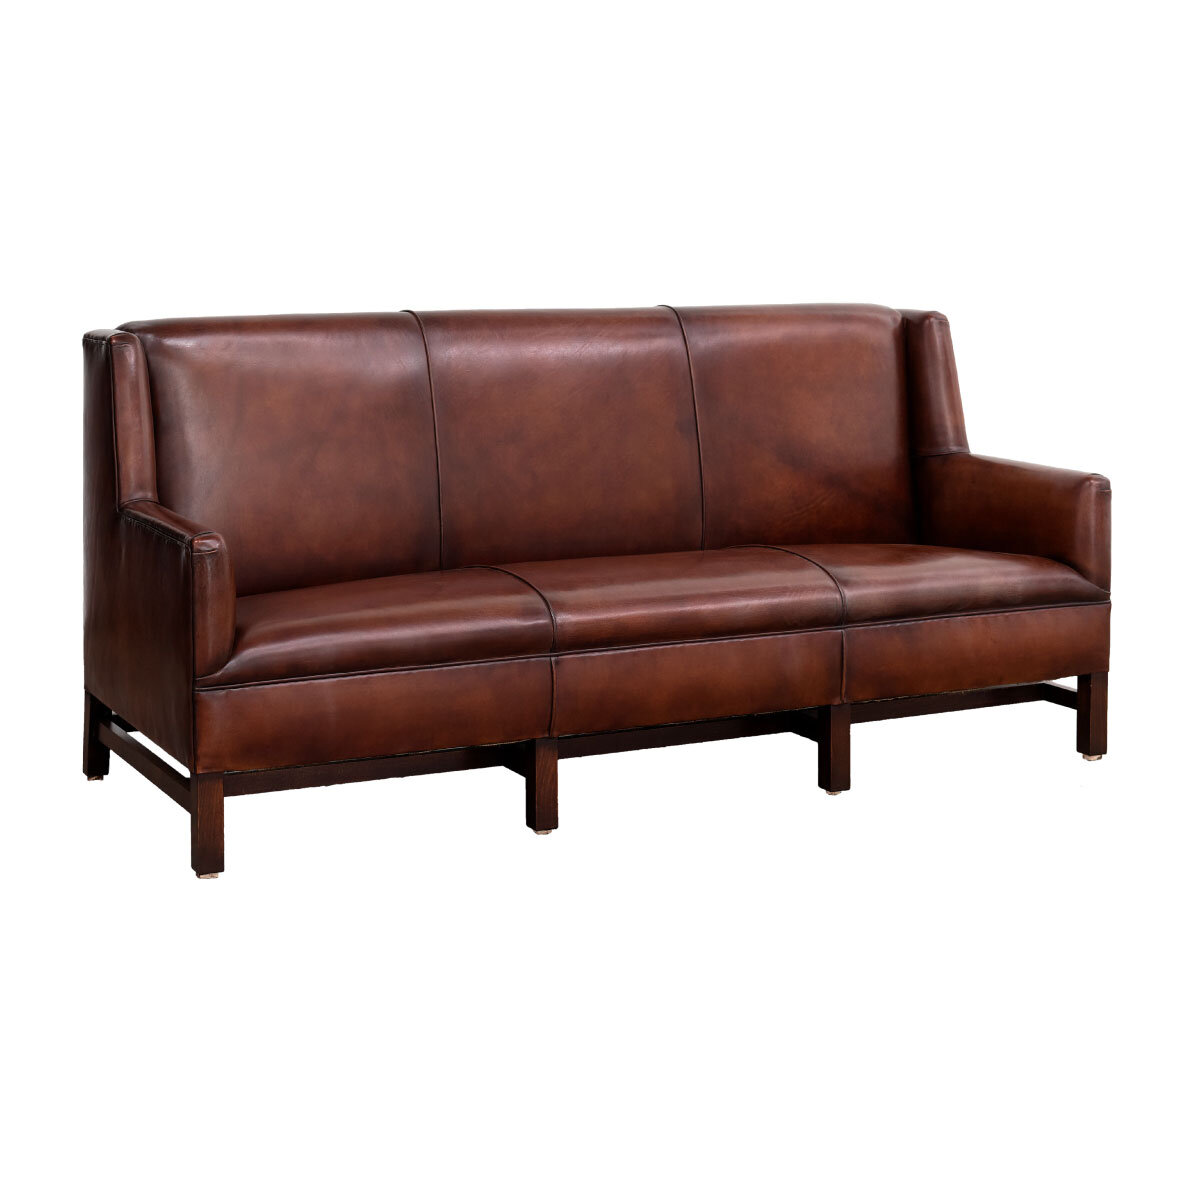 Sofa in Dark Tan Leather.jpg